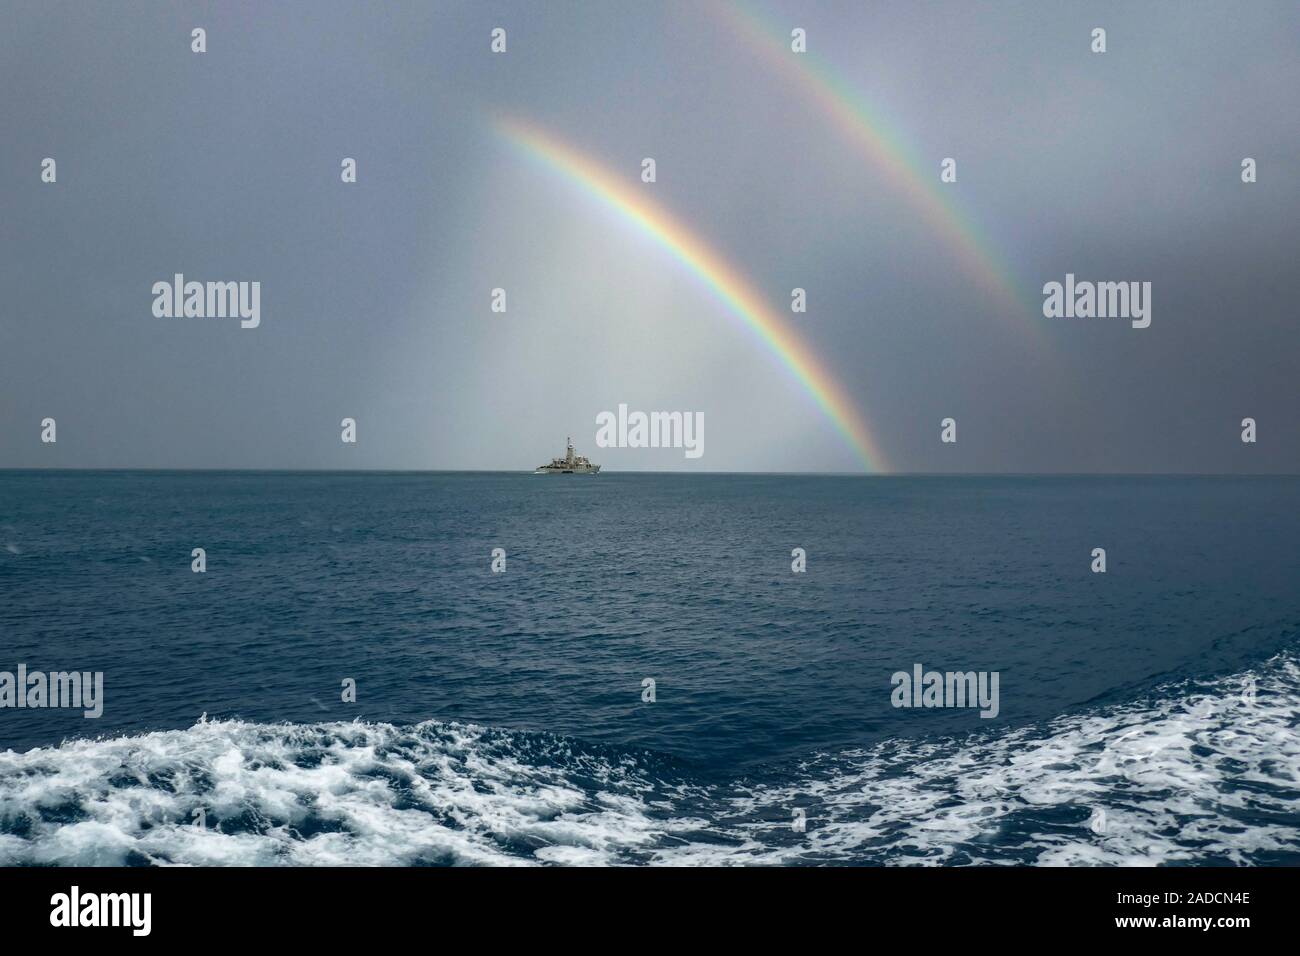 Greek Warship and double rainbow, Kos Town, Kos, Dodecanese, Greece, Aegean Sea, Mediterranean, Stock Photo